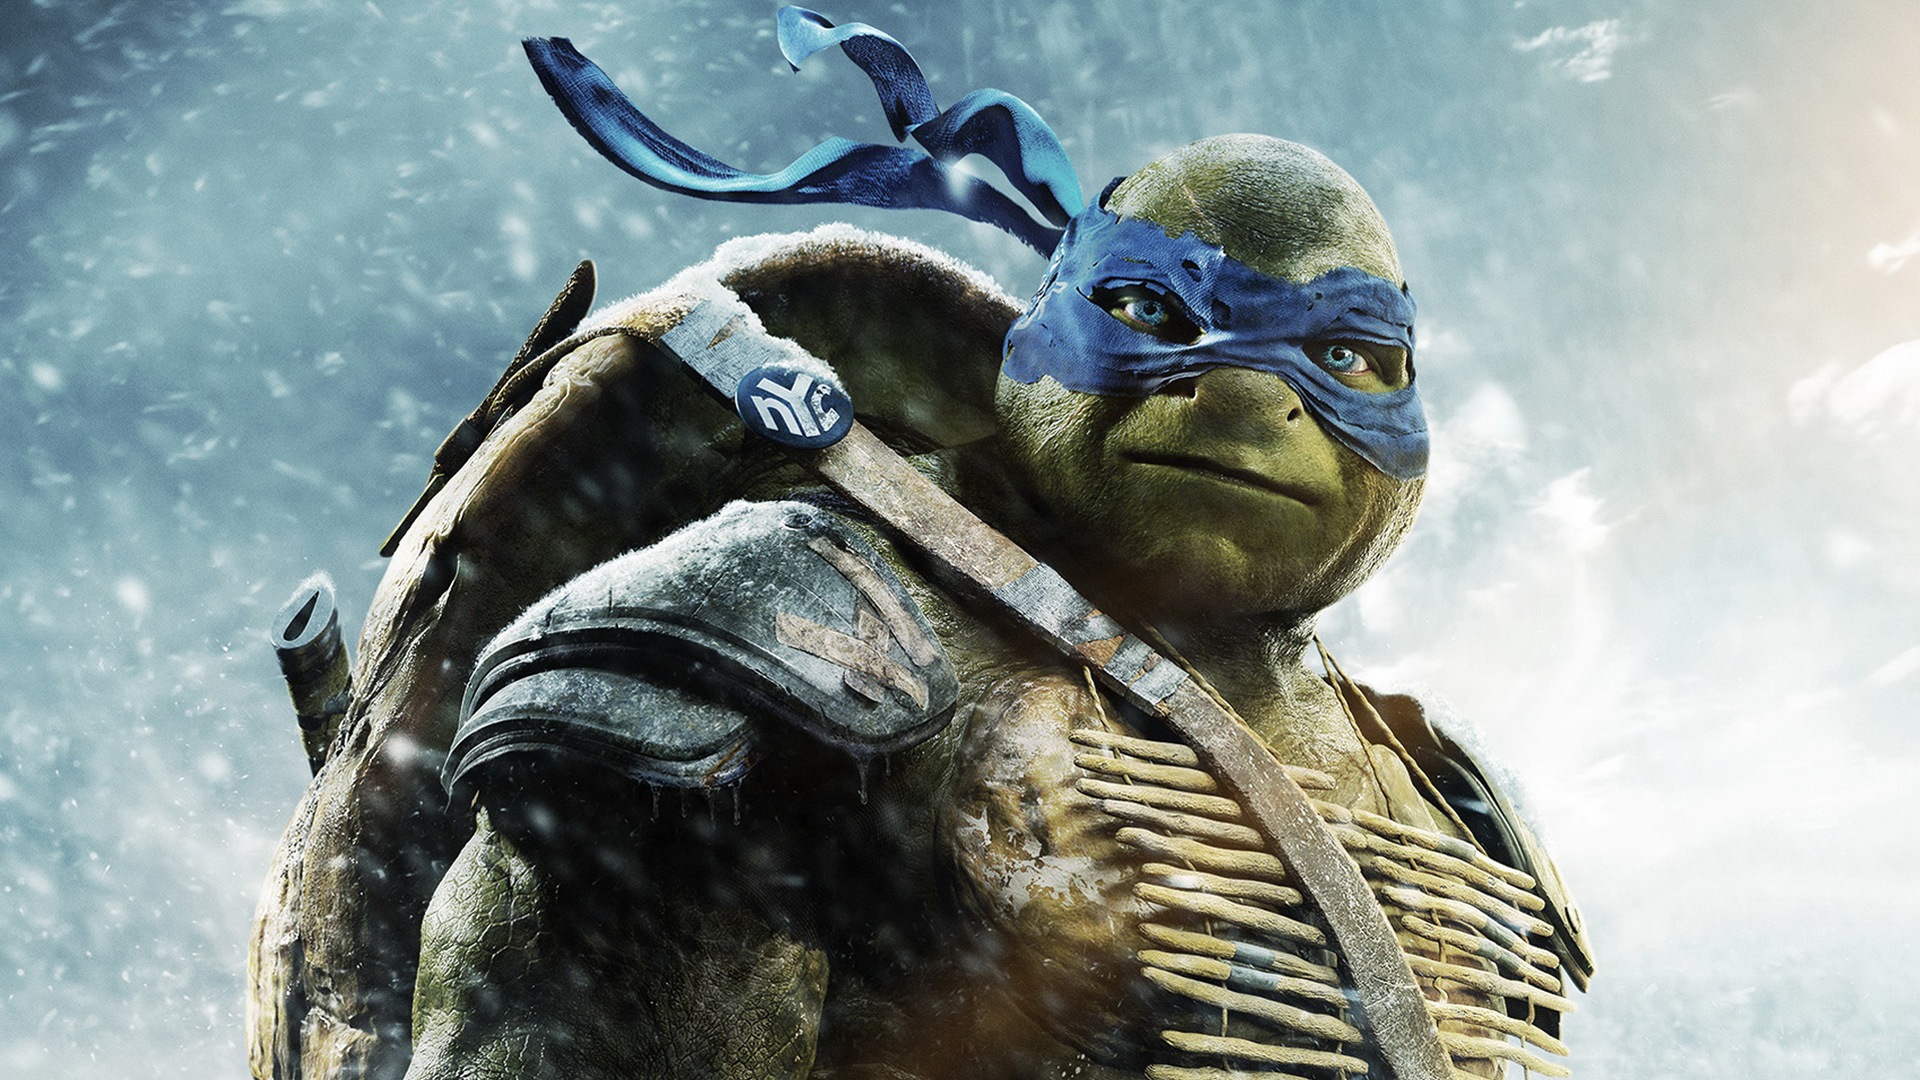 2014 Teenage Mutant Ninja Turtles HD movie wallpapers #1 - 1920x1080